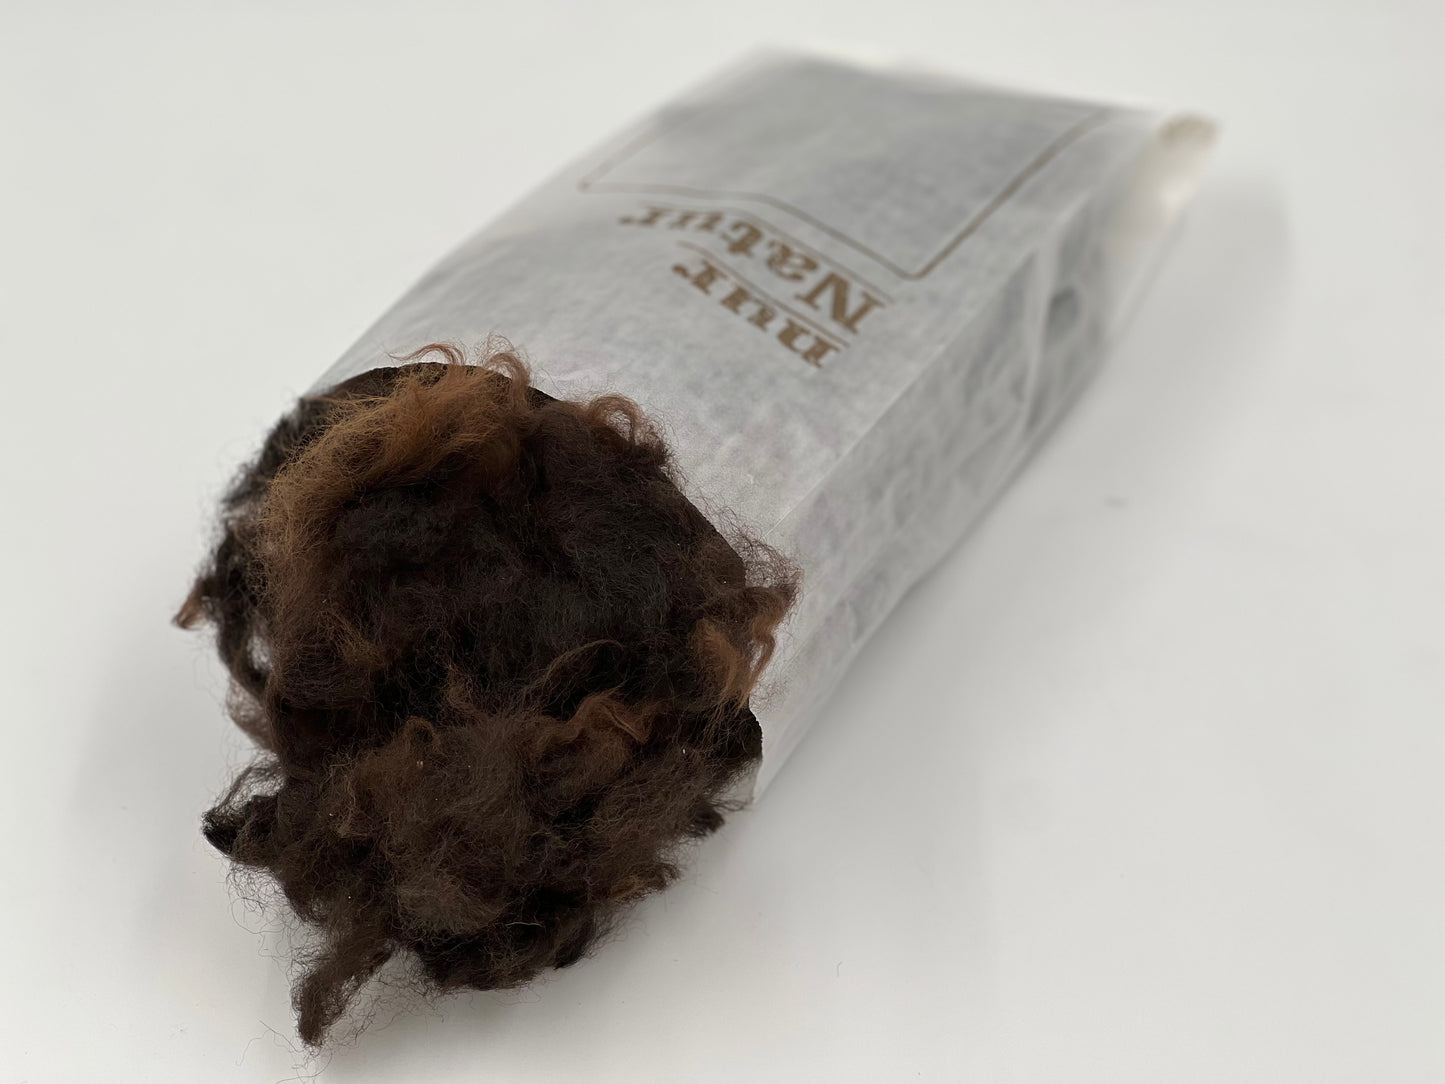 Nachfüllpaket Alpakawolle (Dunkelbraun) in ökologischer Verpackung